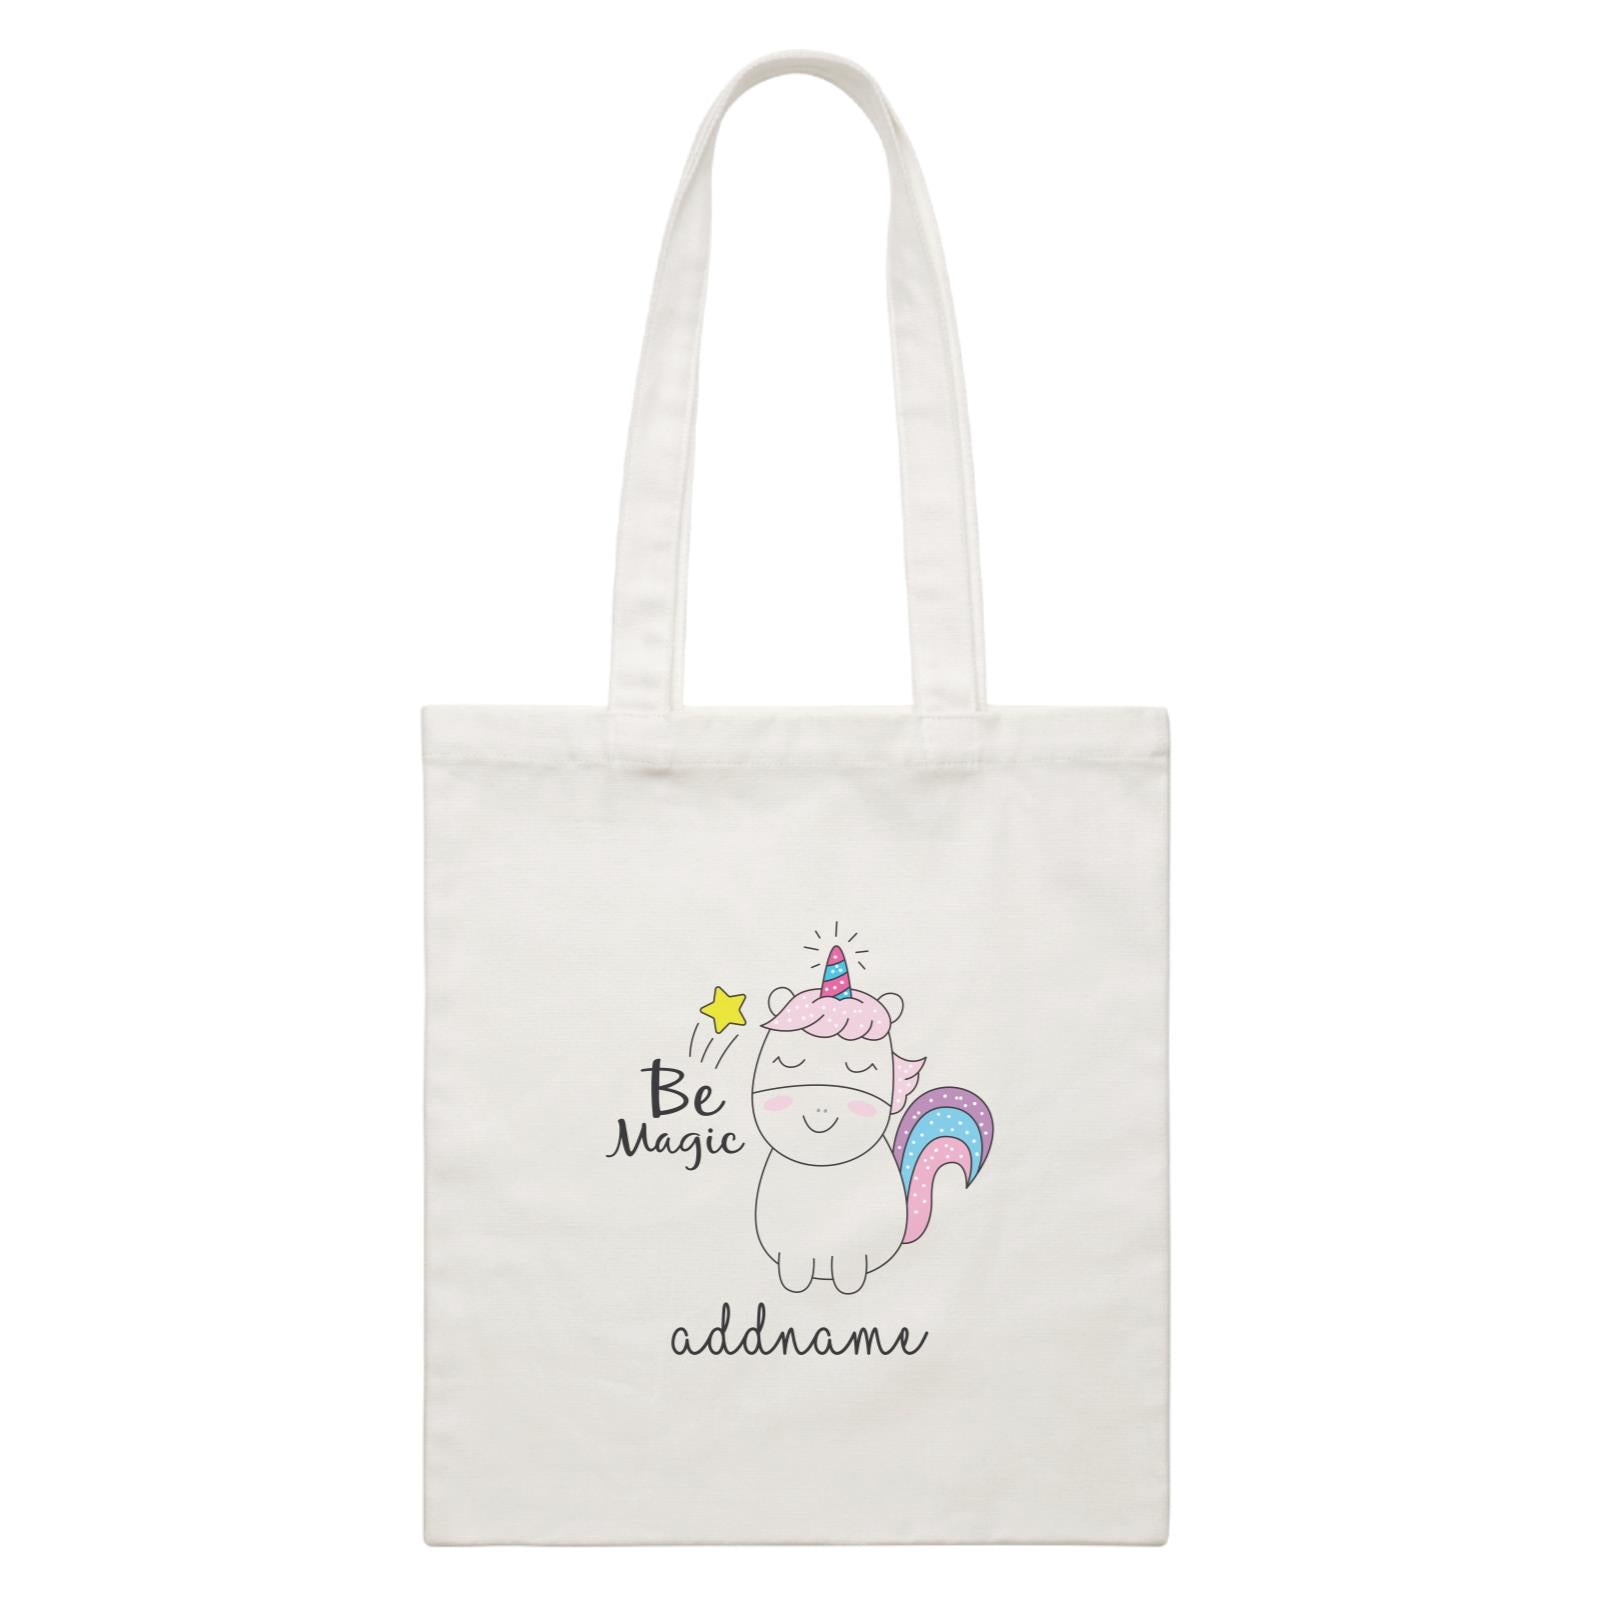 Cool Cute Unicorn Be Magic Addname White Canvas Bag